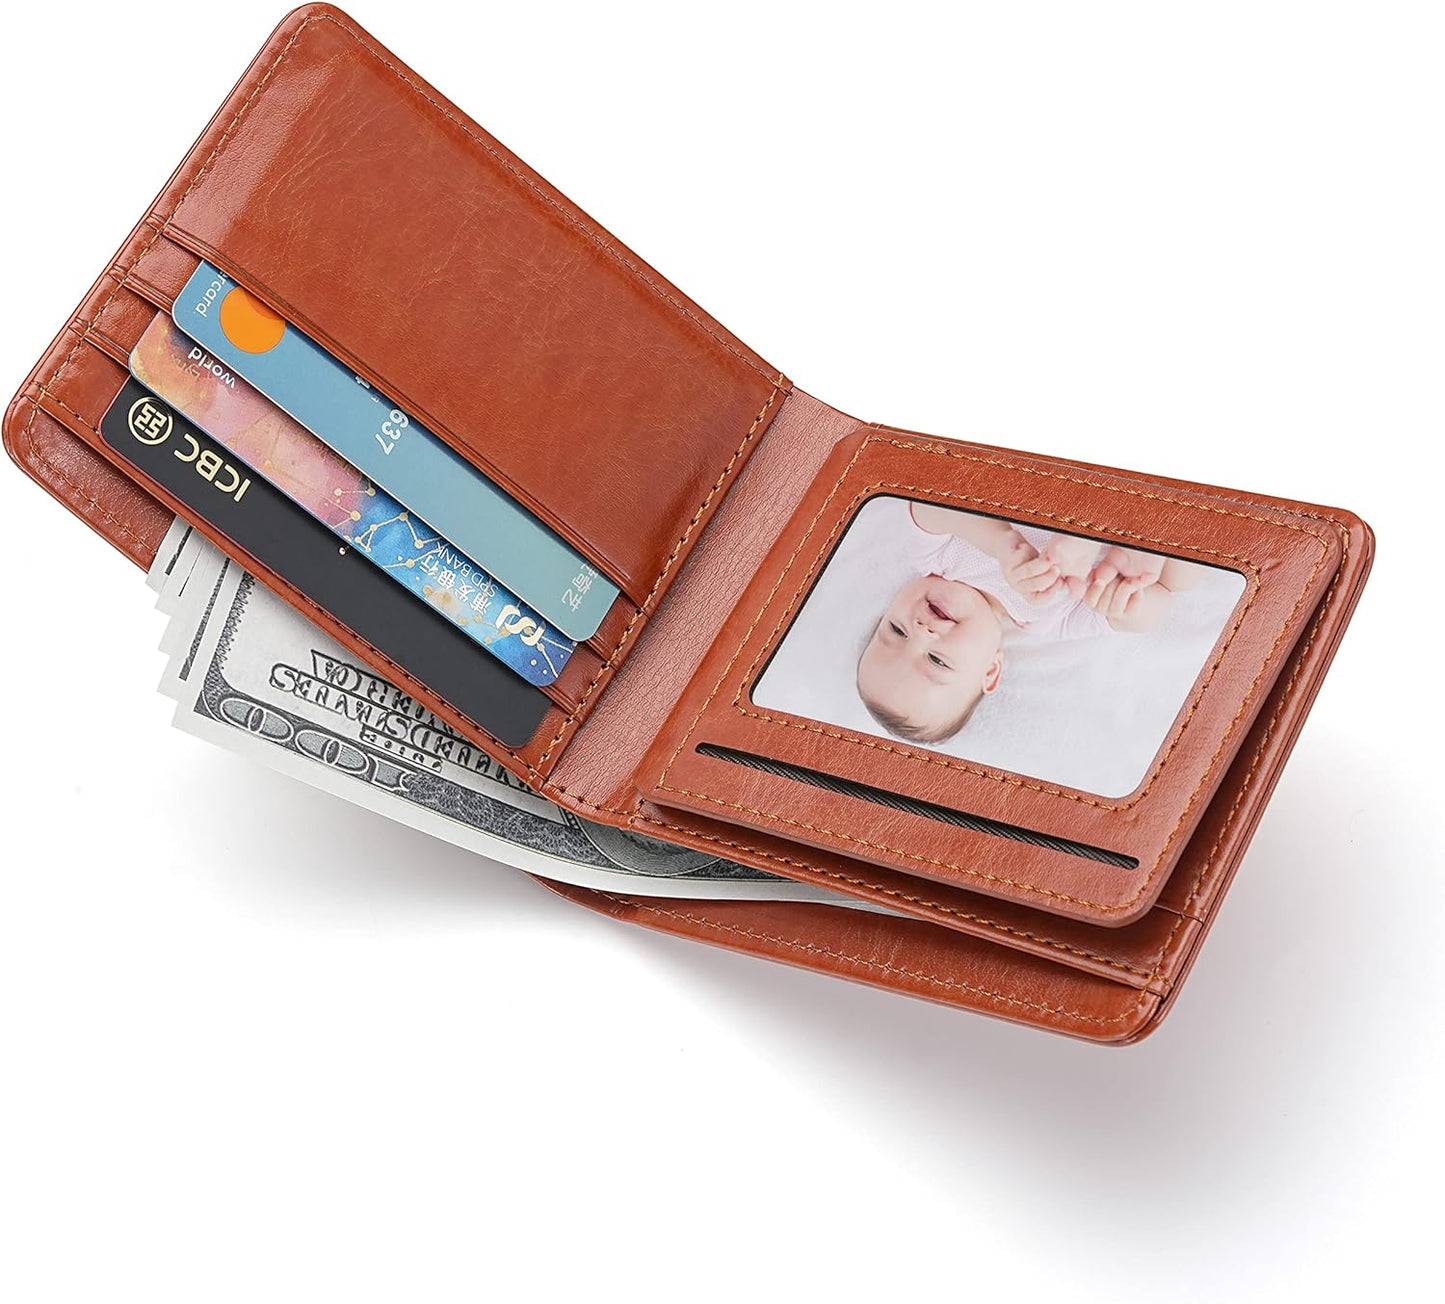 Plans To Prosper You Leather Christian Wallet claimedbygoddesigns